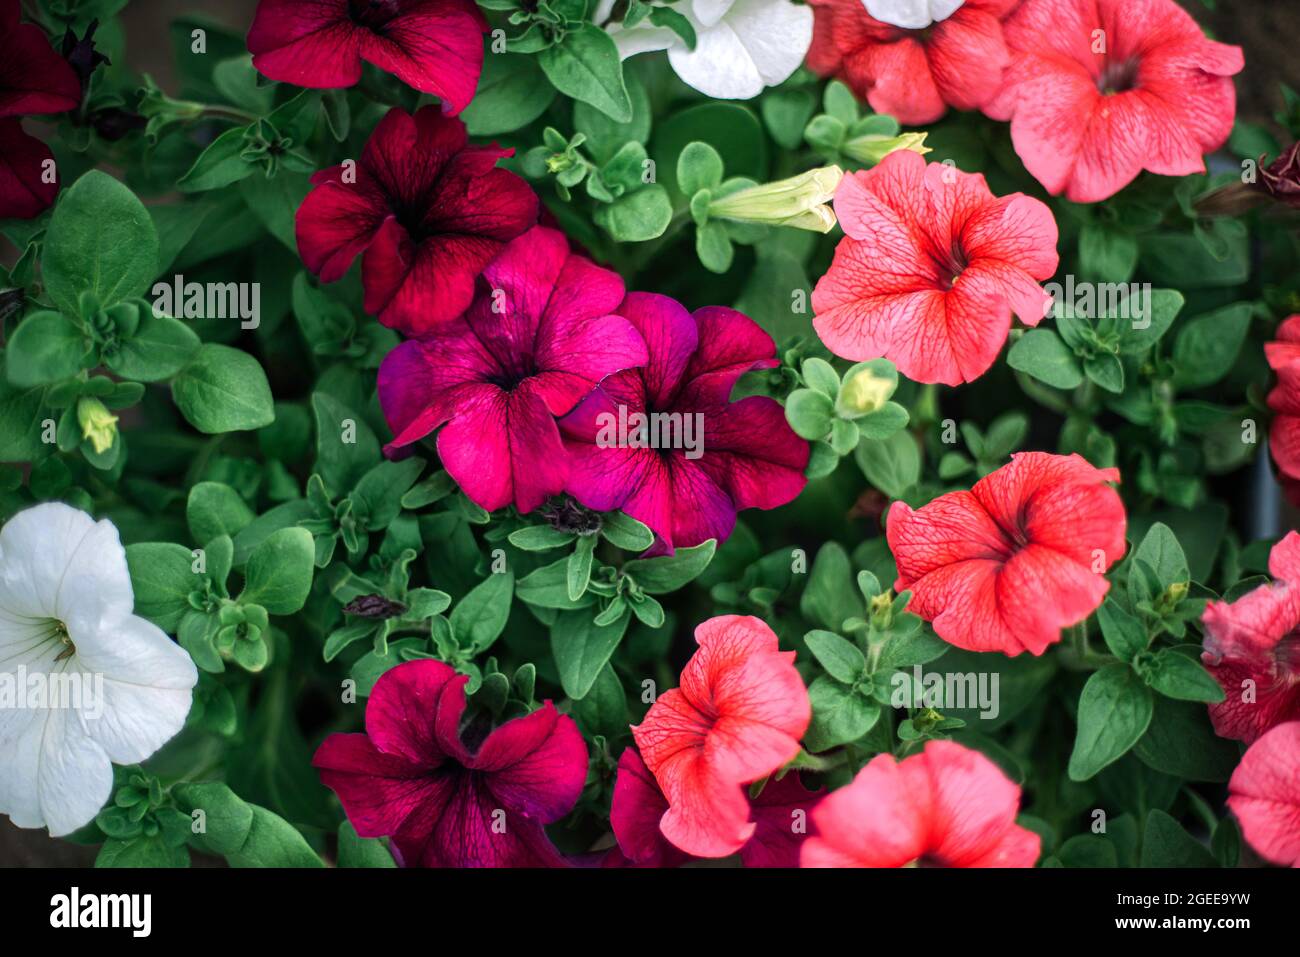 Petunia flowers for sale in garden Stock Photo